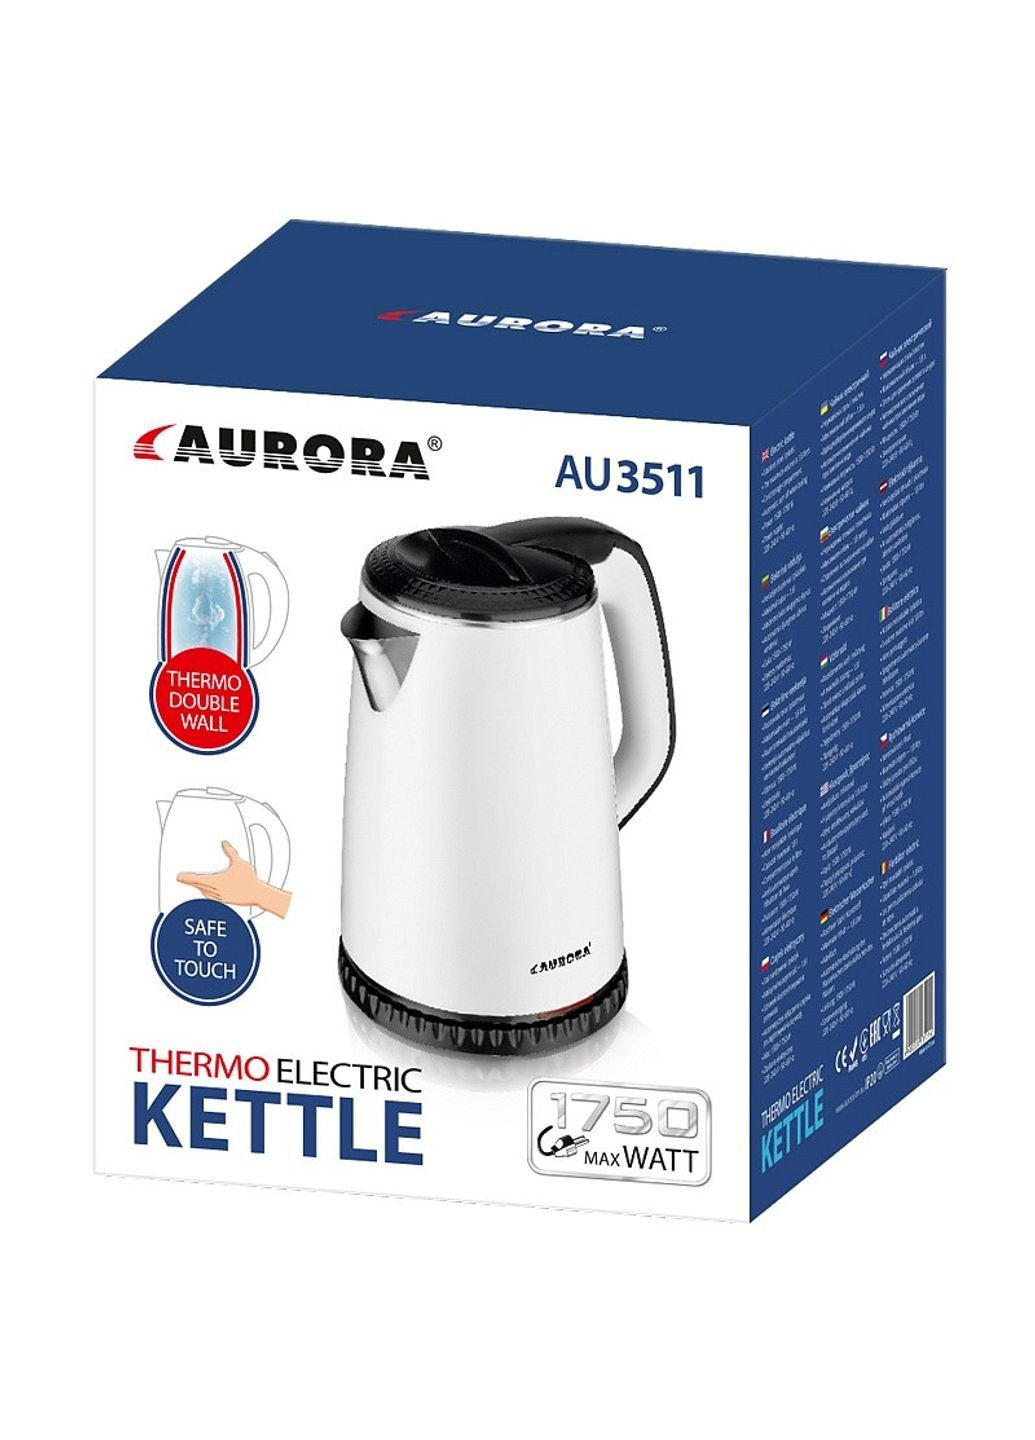 Електричний чайник 3511AU 1.8 л Aurora (253544957)